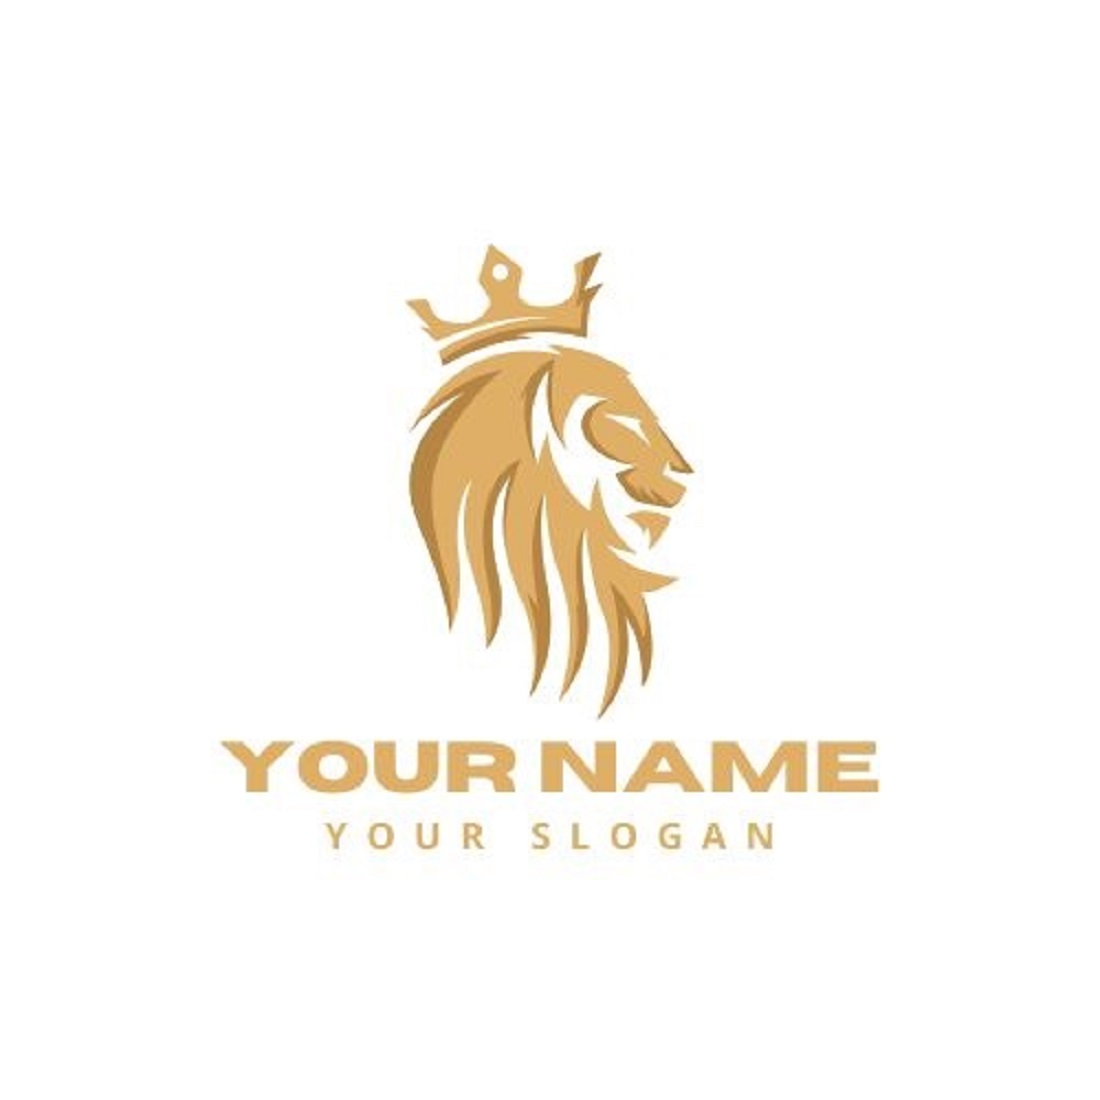 Elegantes Logo preview image.